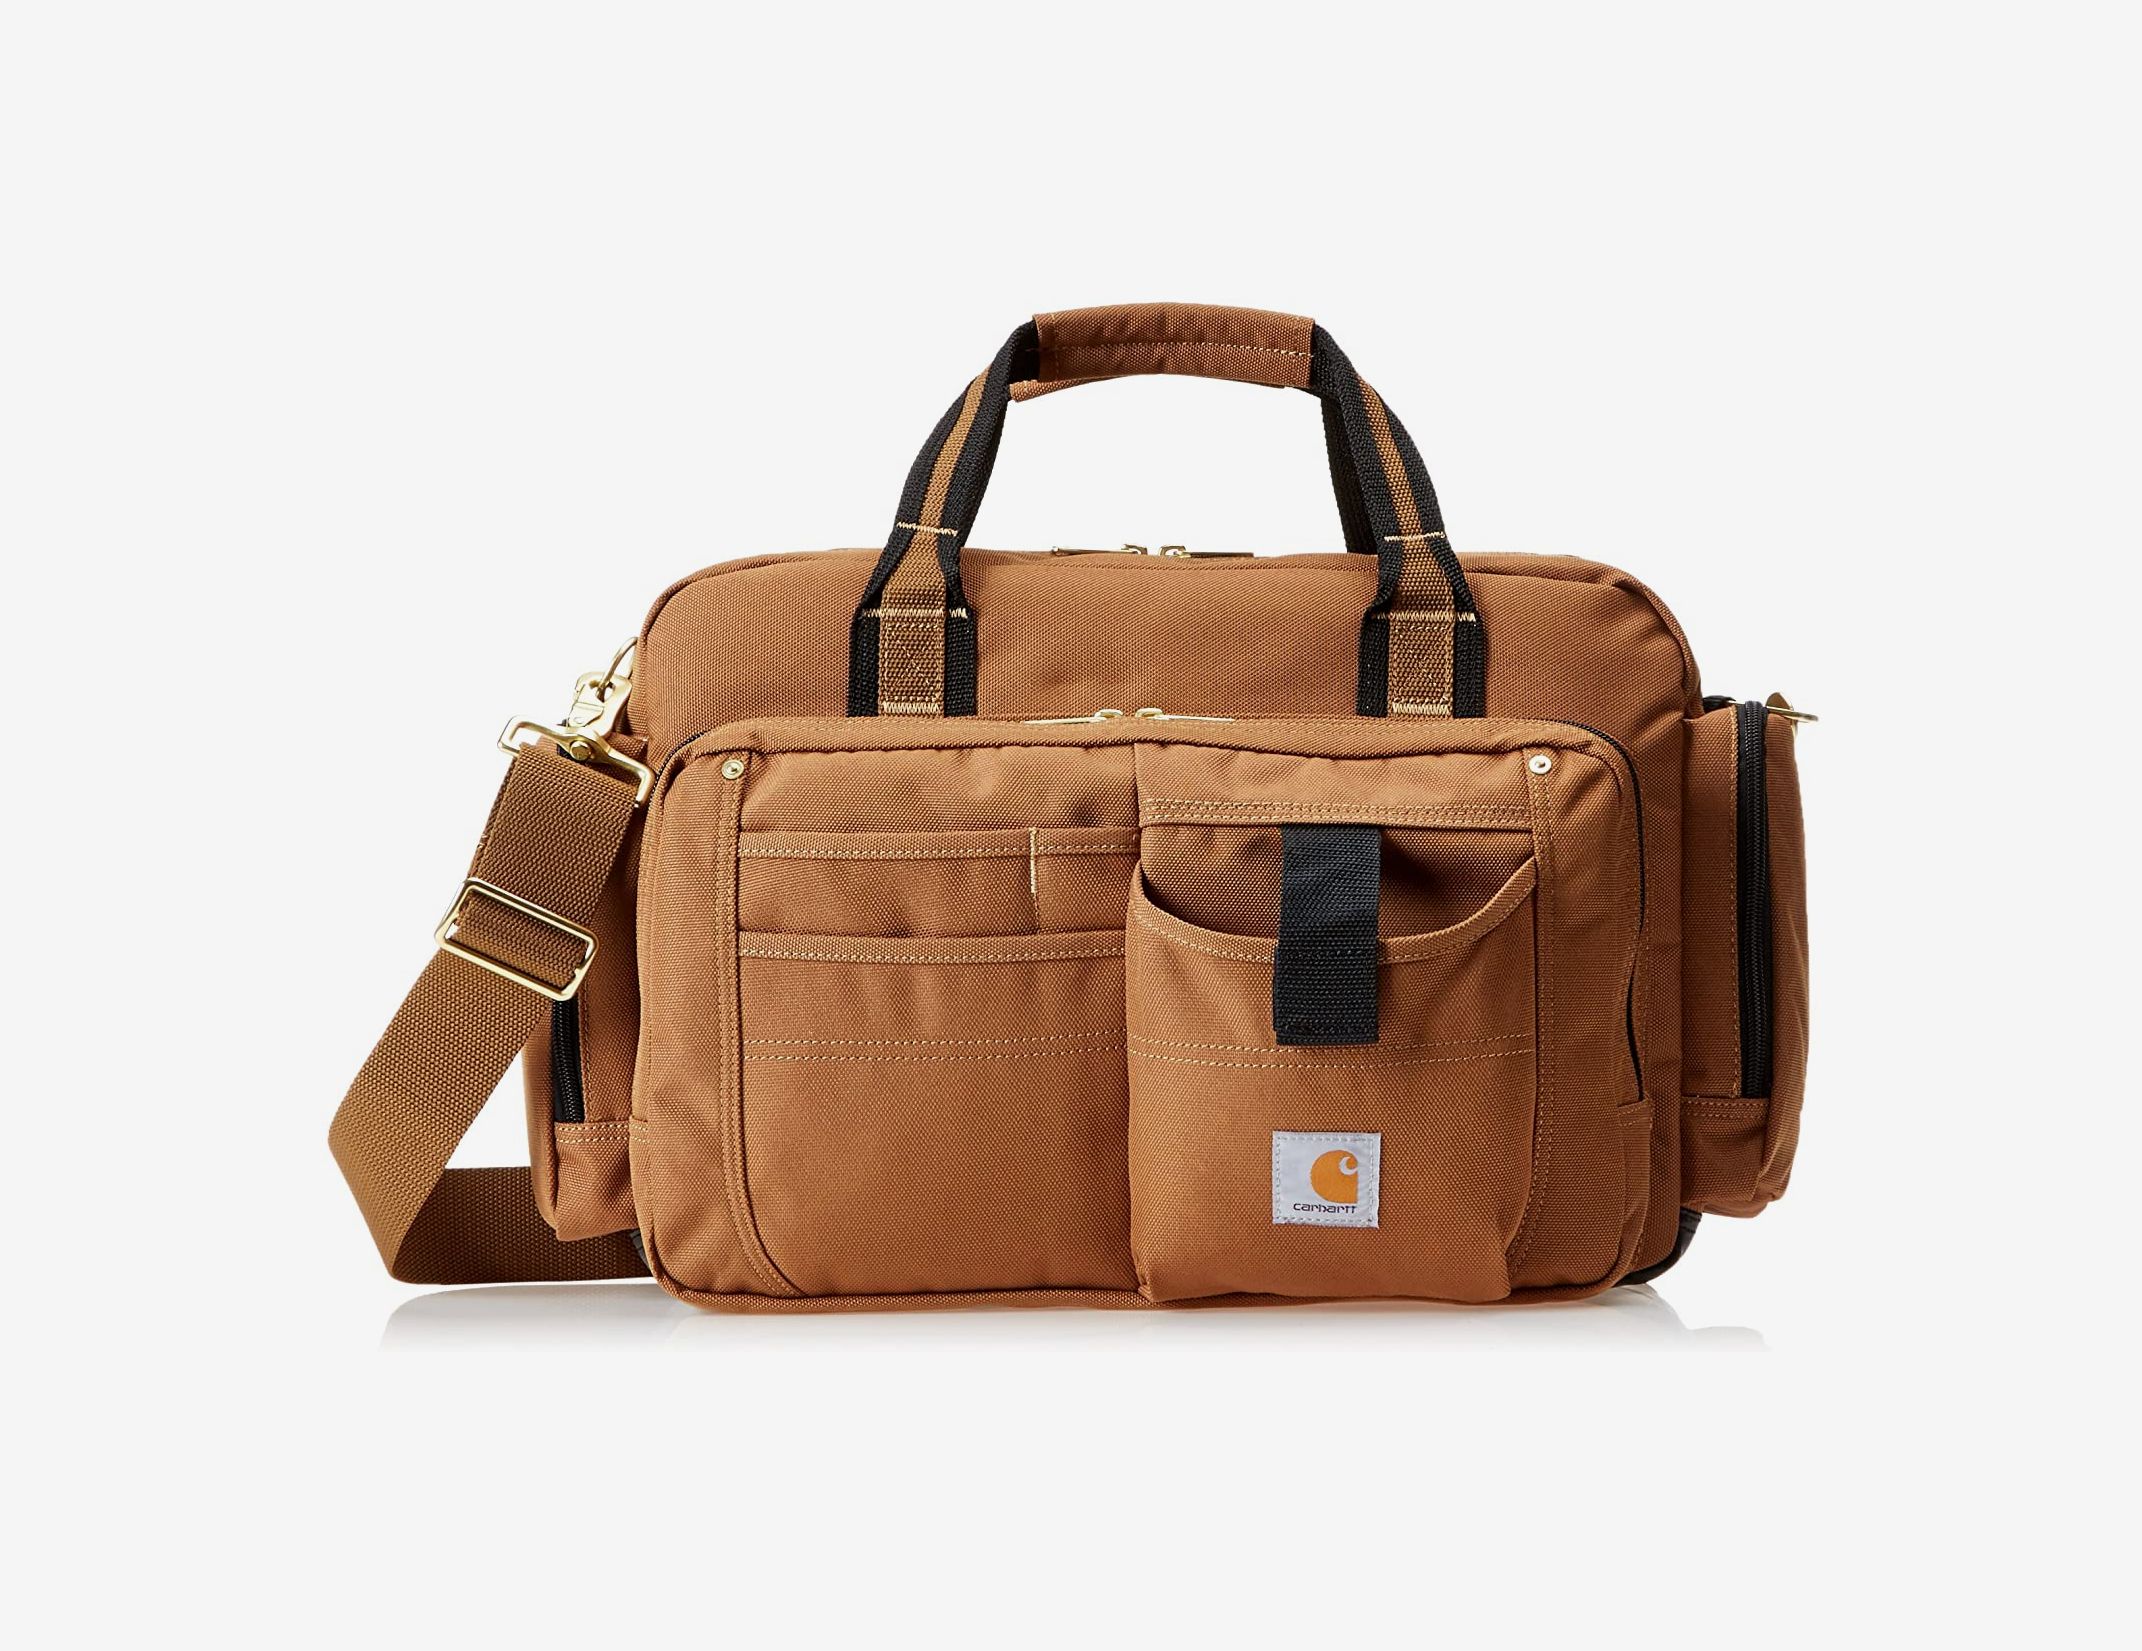 Cheap & Fashion Mens Designer Messenger Bags - Dhg8